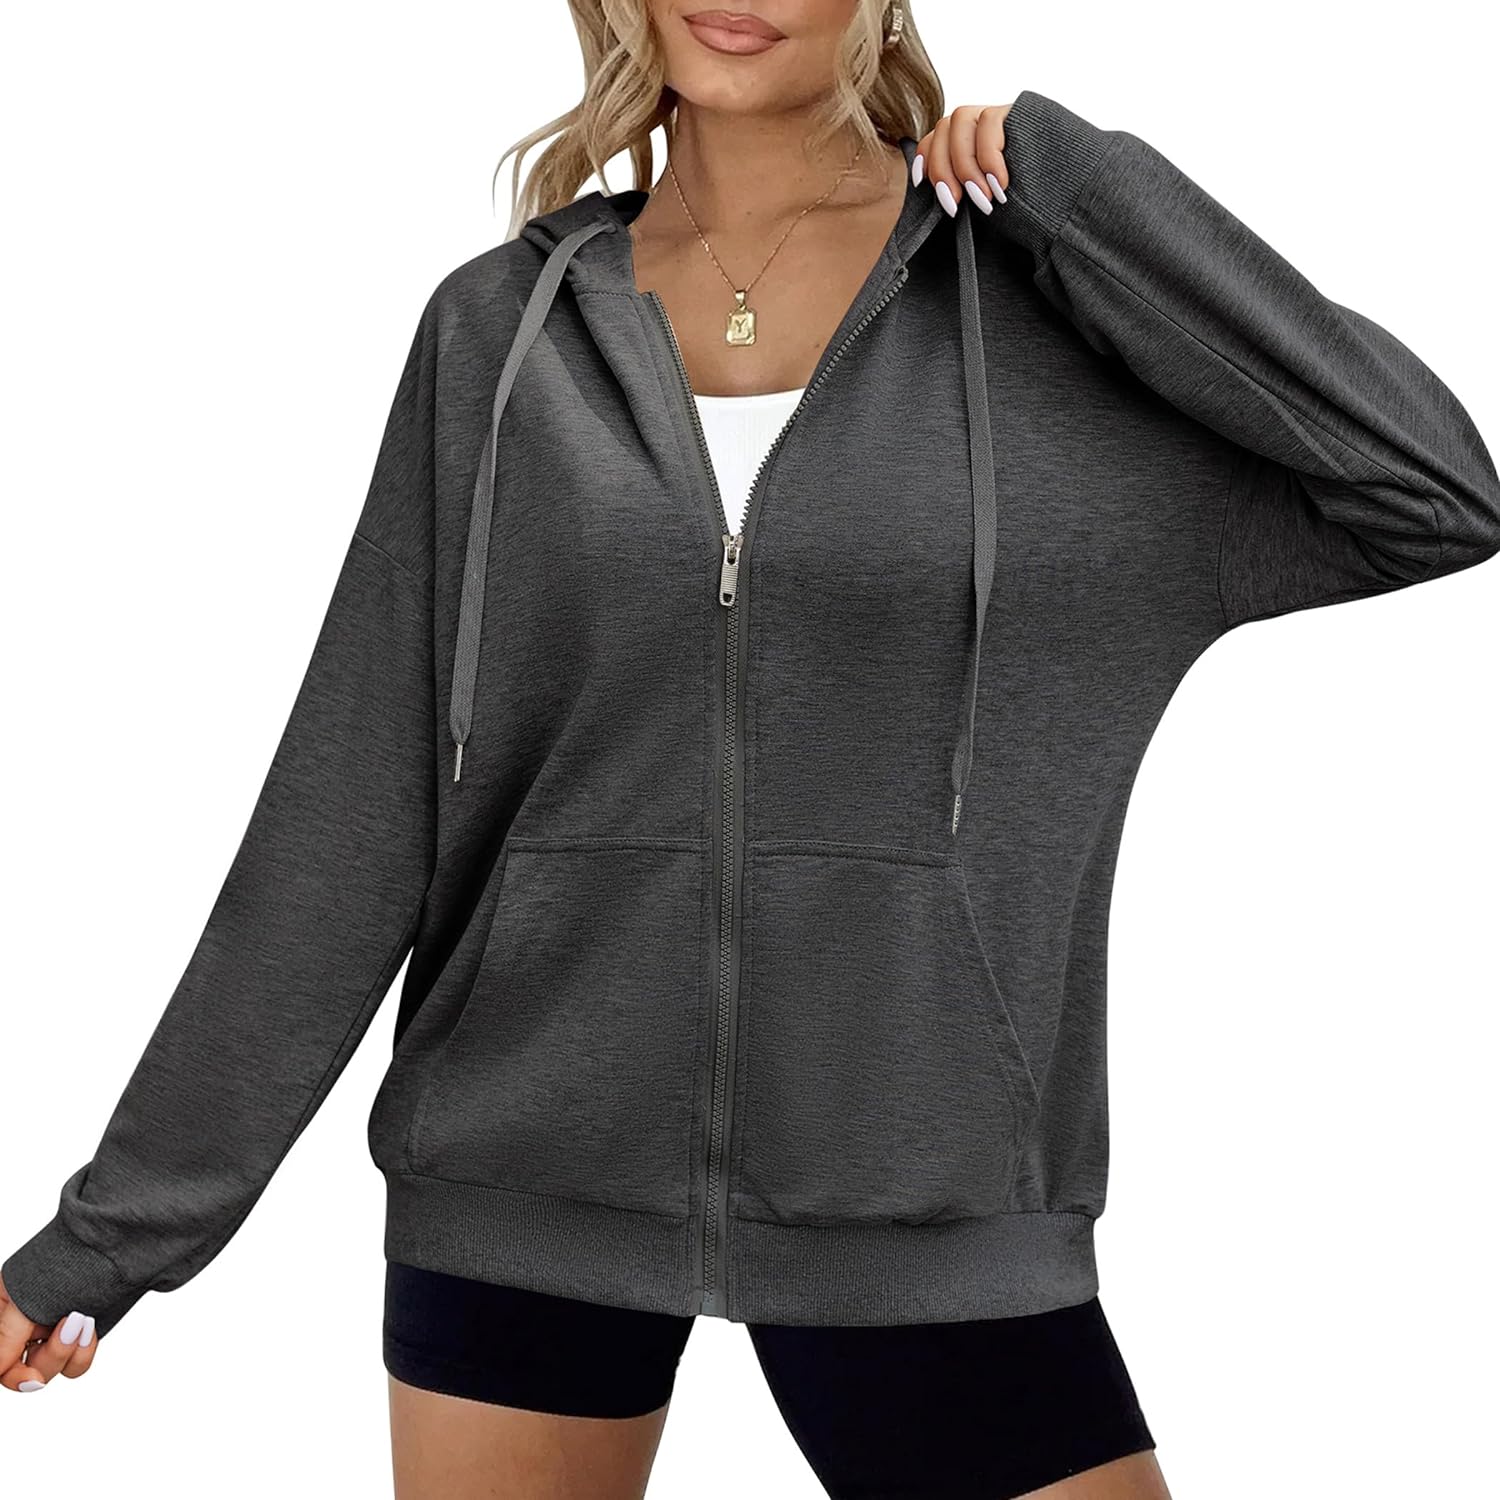 Zeagoo Women's Lightweight Hoodies Full Zip Up Oversized Sweatshirts with Pockets Long Sleeve Thin Casual Hooded Jackets